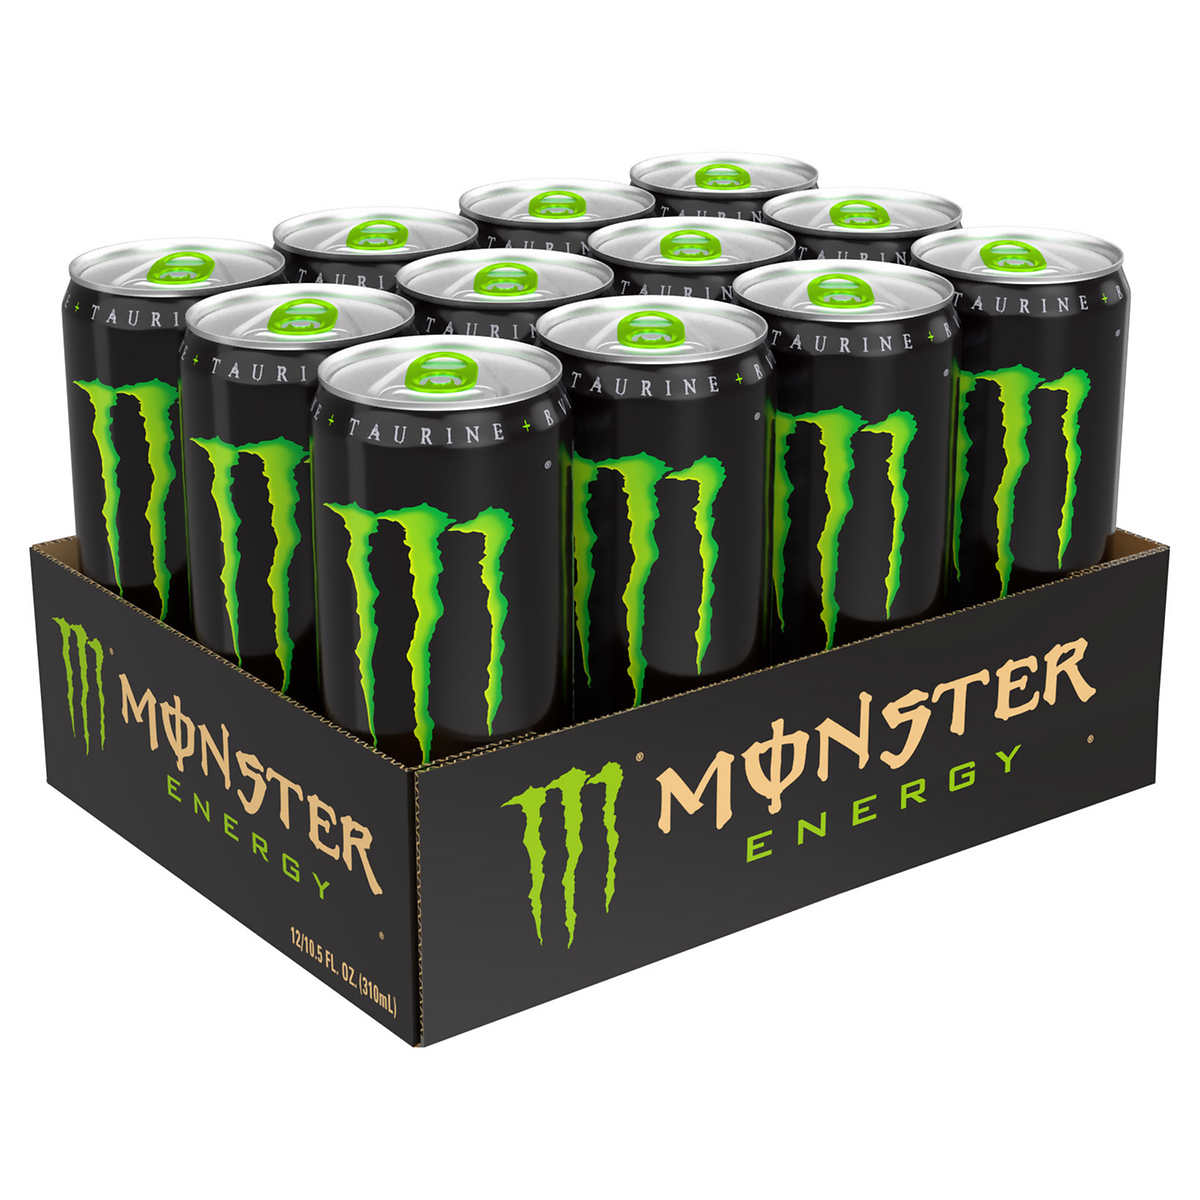 Monster energi drik, 12 stk a 300 ml
Monster Energy Drink, 10.5 fl oz, 12-count